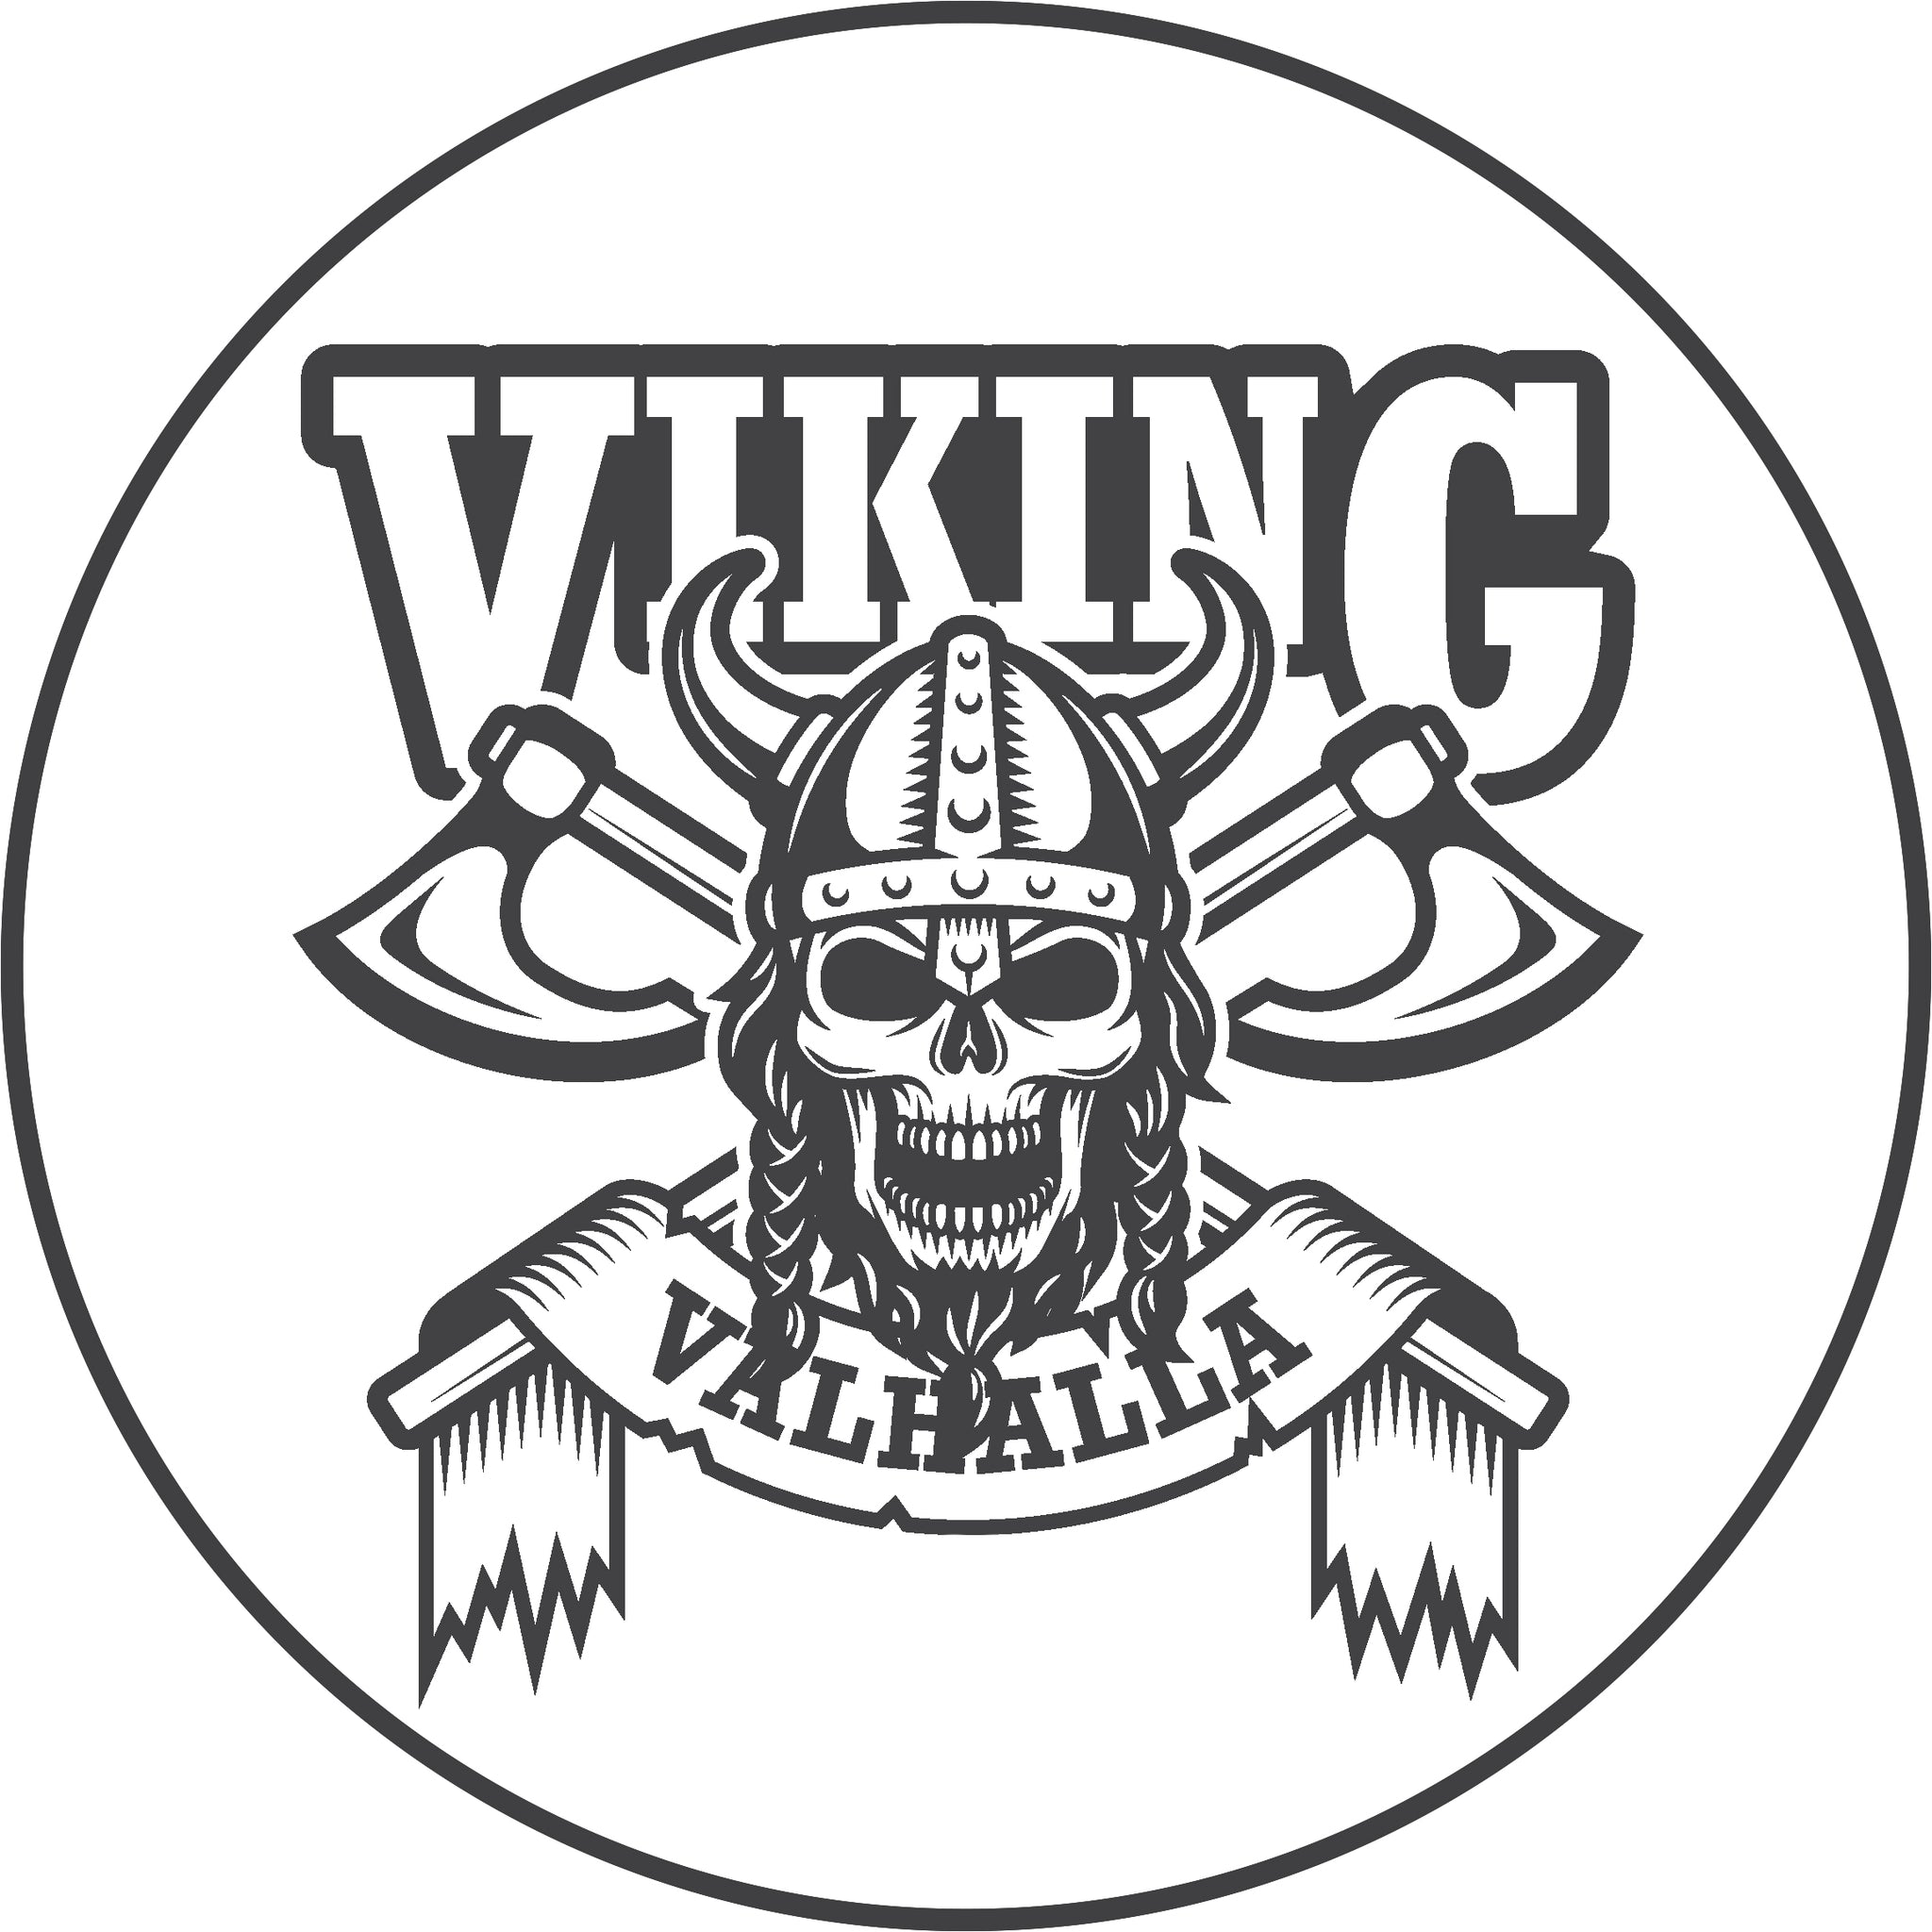 Cool Vintage Gray Cartoon Logo Icon - Viking Border Around Image As Shown Vinyl Decal Sticker